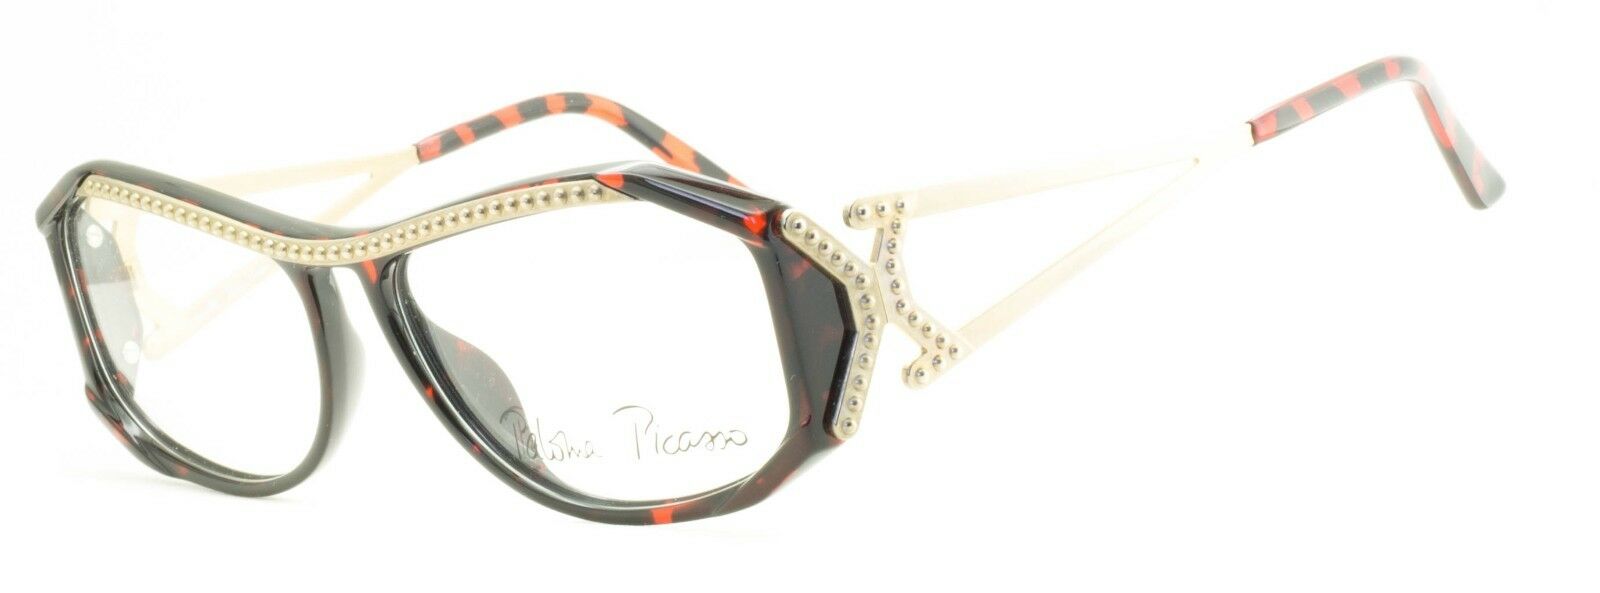 PALOMA PICASSO 3739 30 Vintage FRAMES Glasses RX Optical Eyewear Eyeglasses NOS